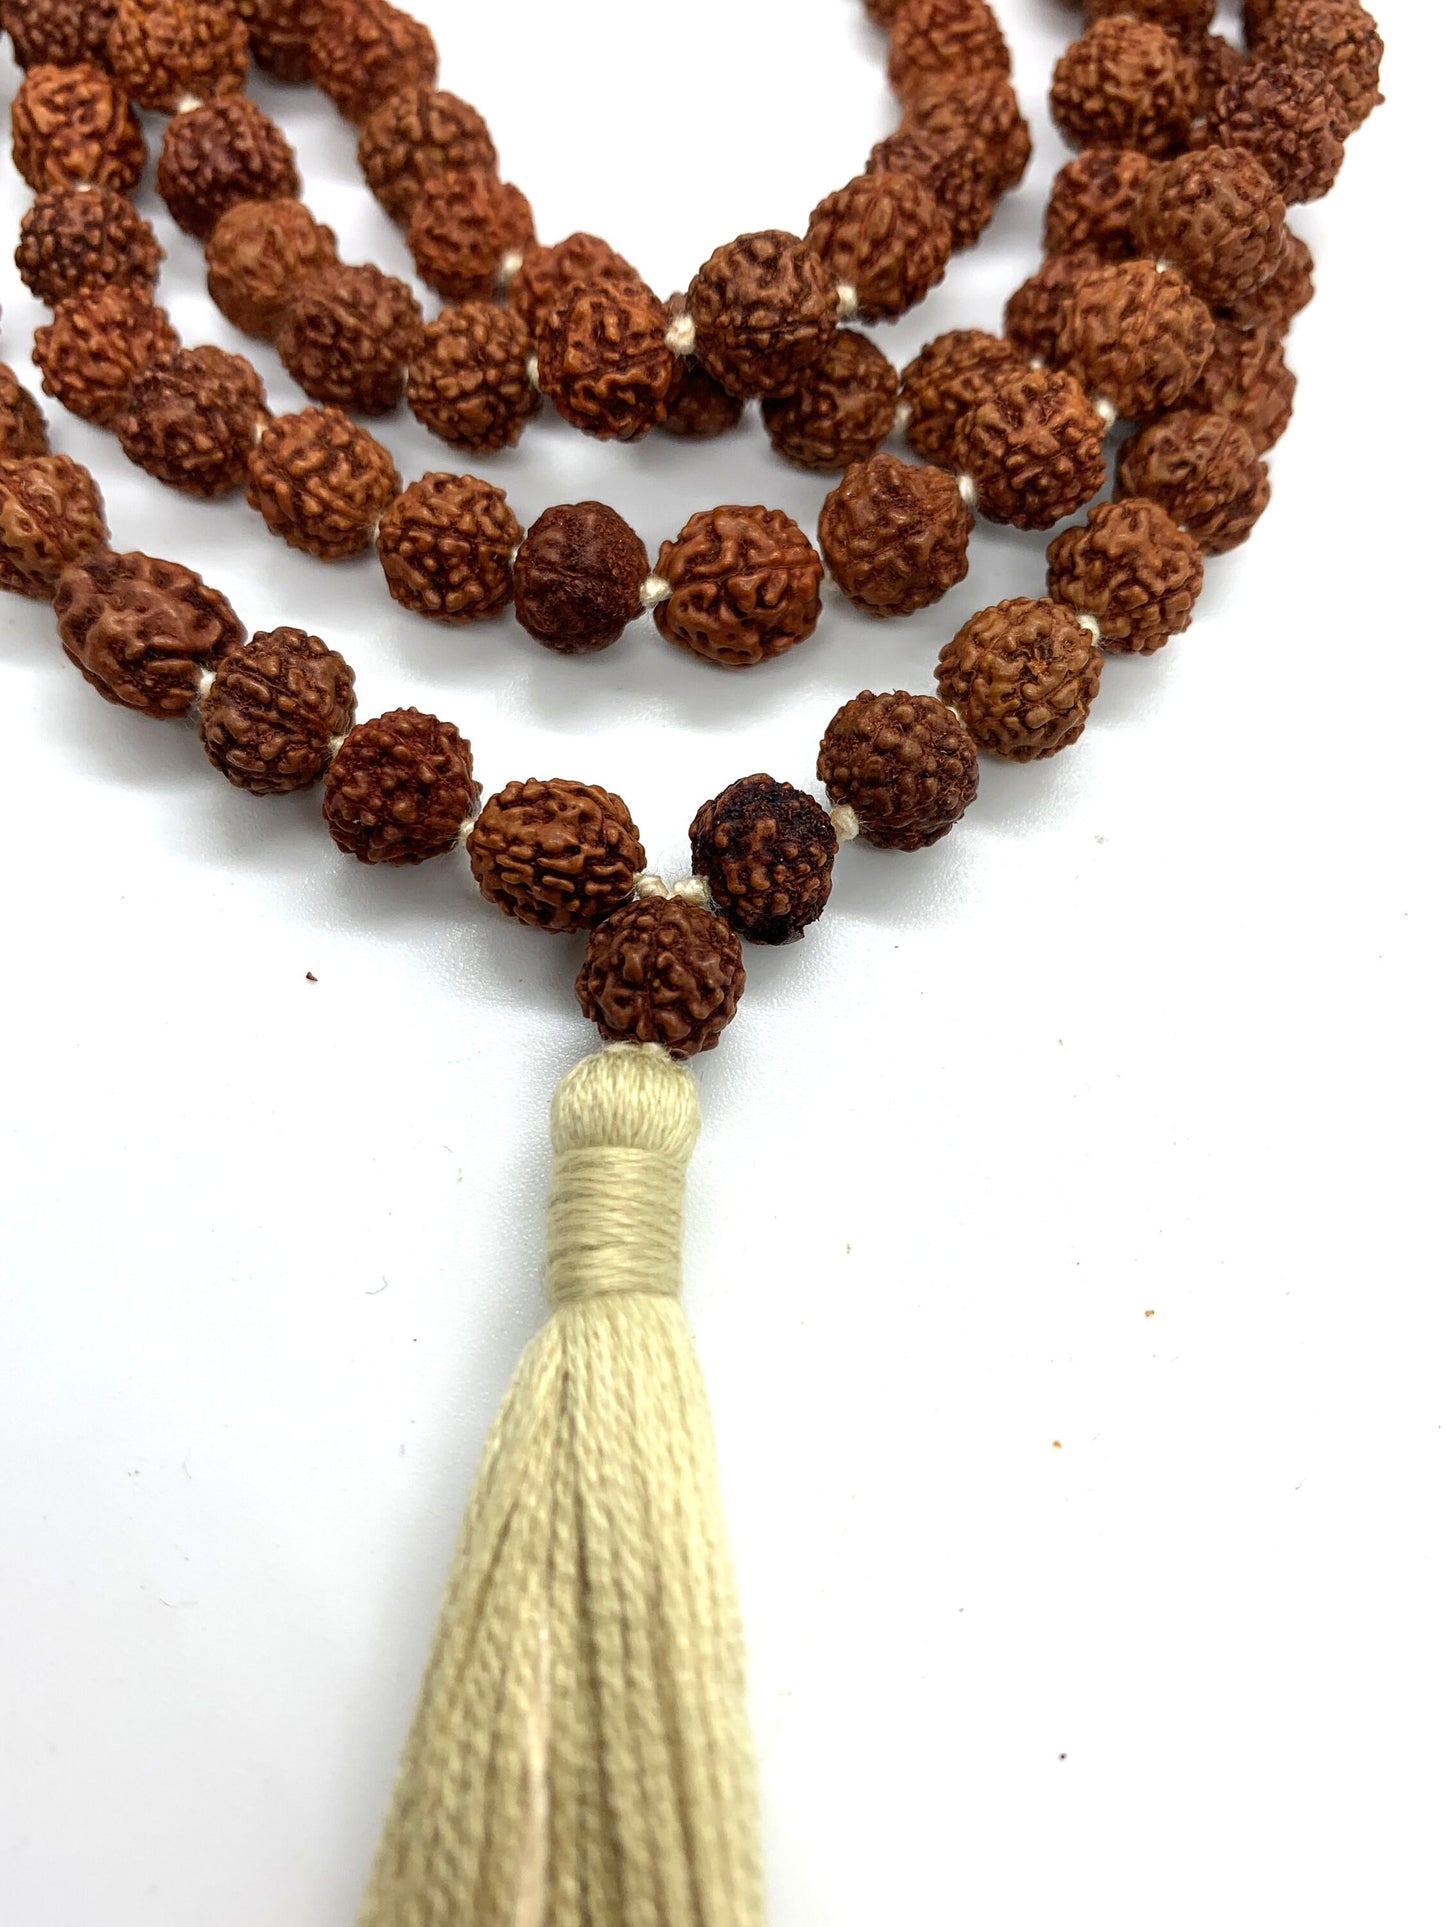 Rudraksha Mala 8 mm, 108 Japa Mala Knotted, Prayer Mala, Rudraksha Necklace India Shiva Mala, Meditation Buddhist Prayer Beads Beige Tassel